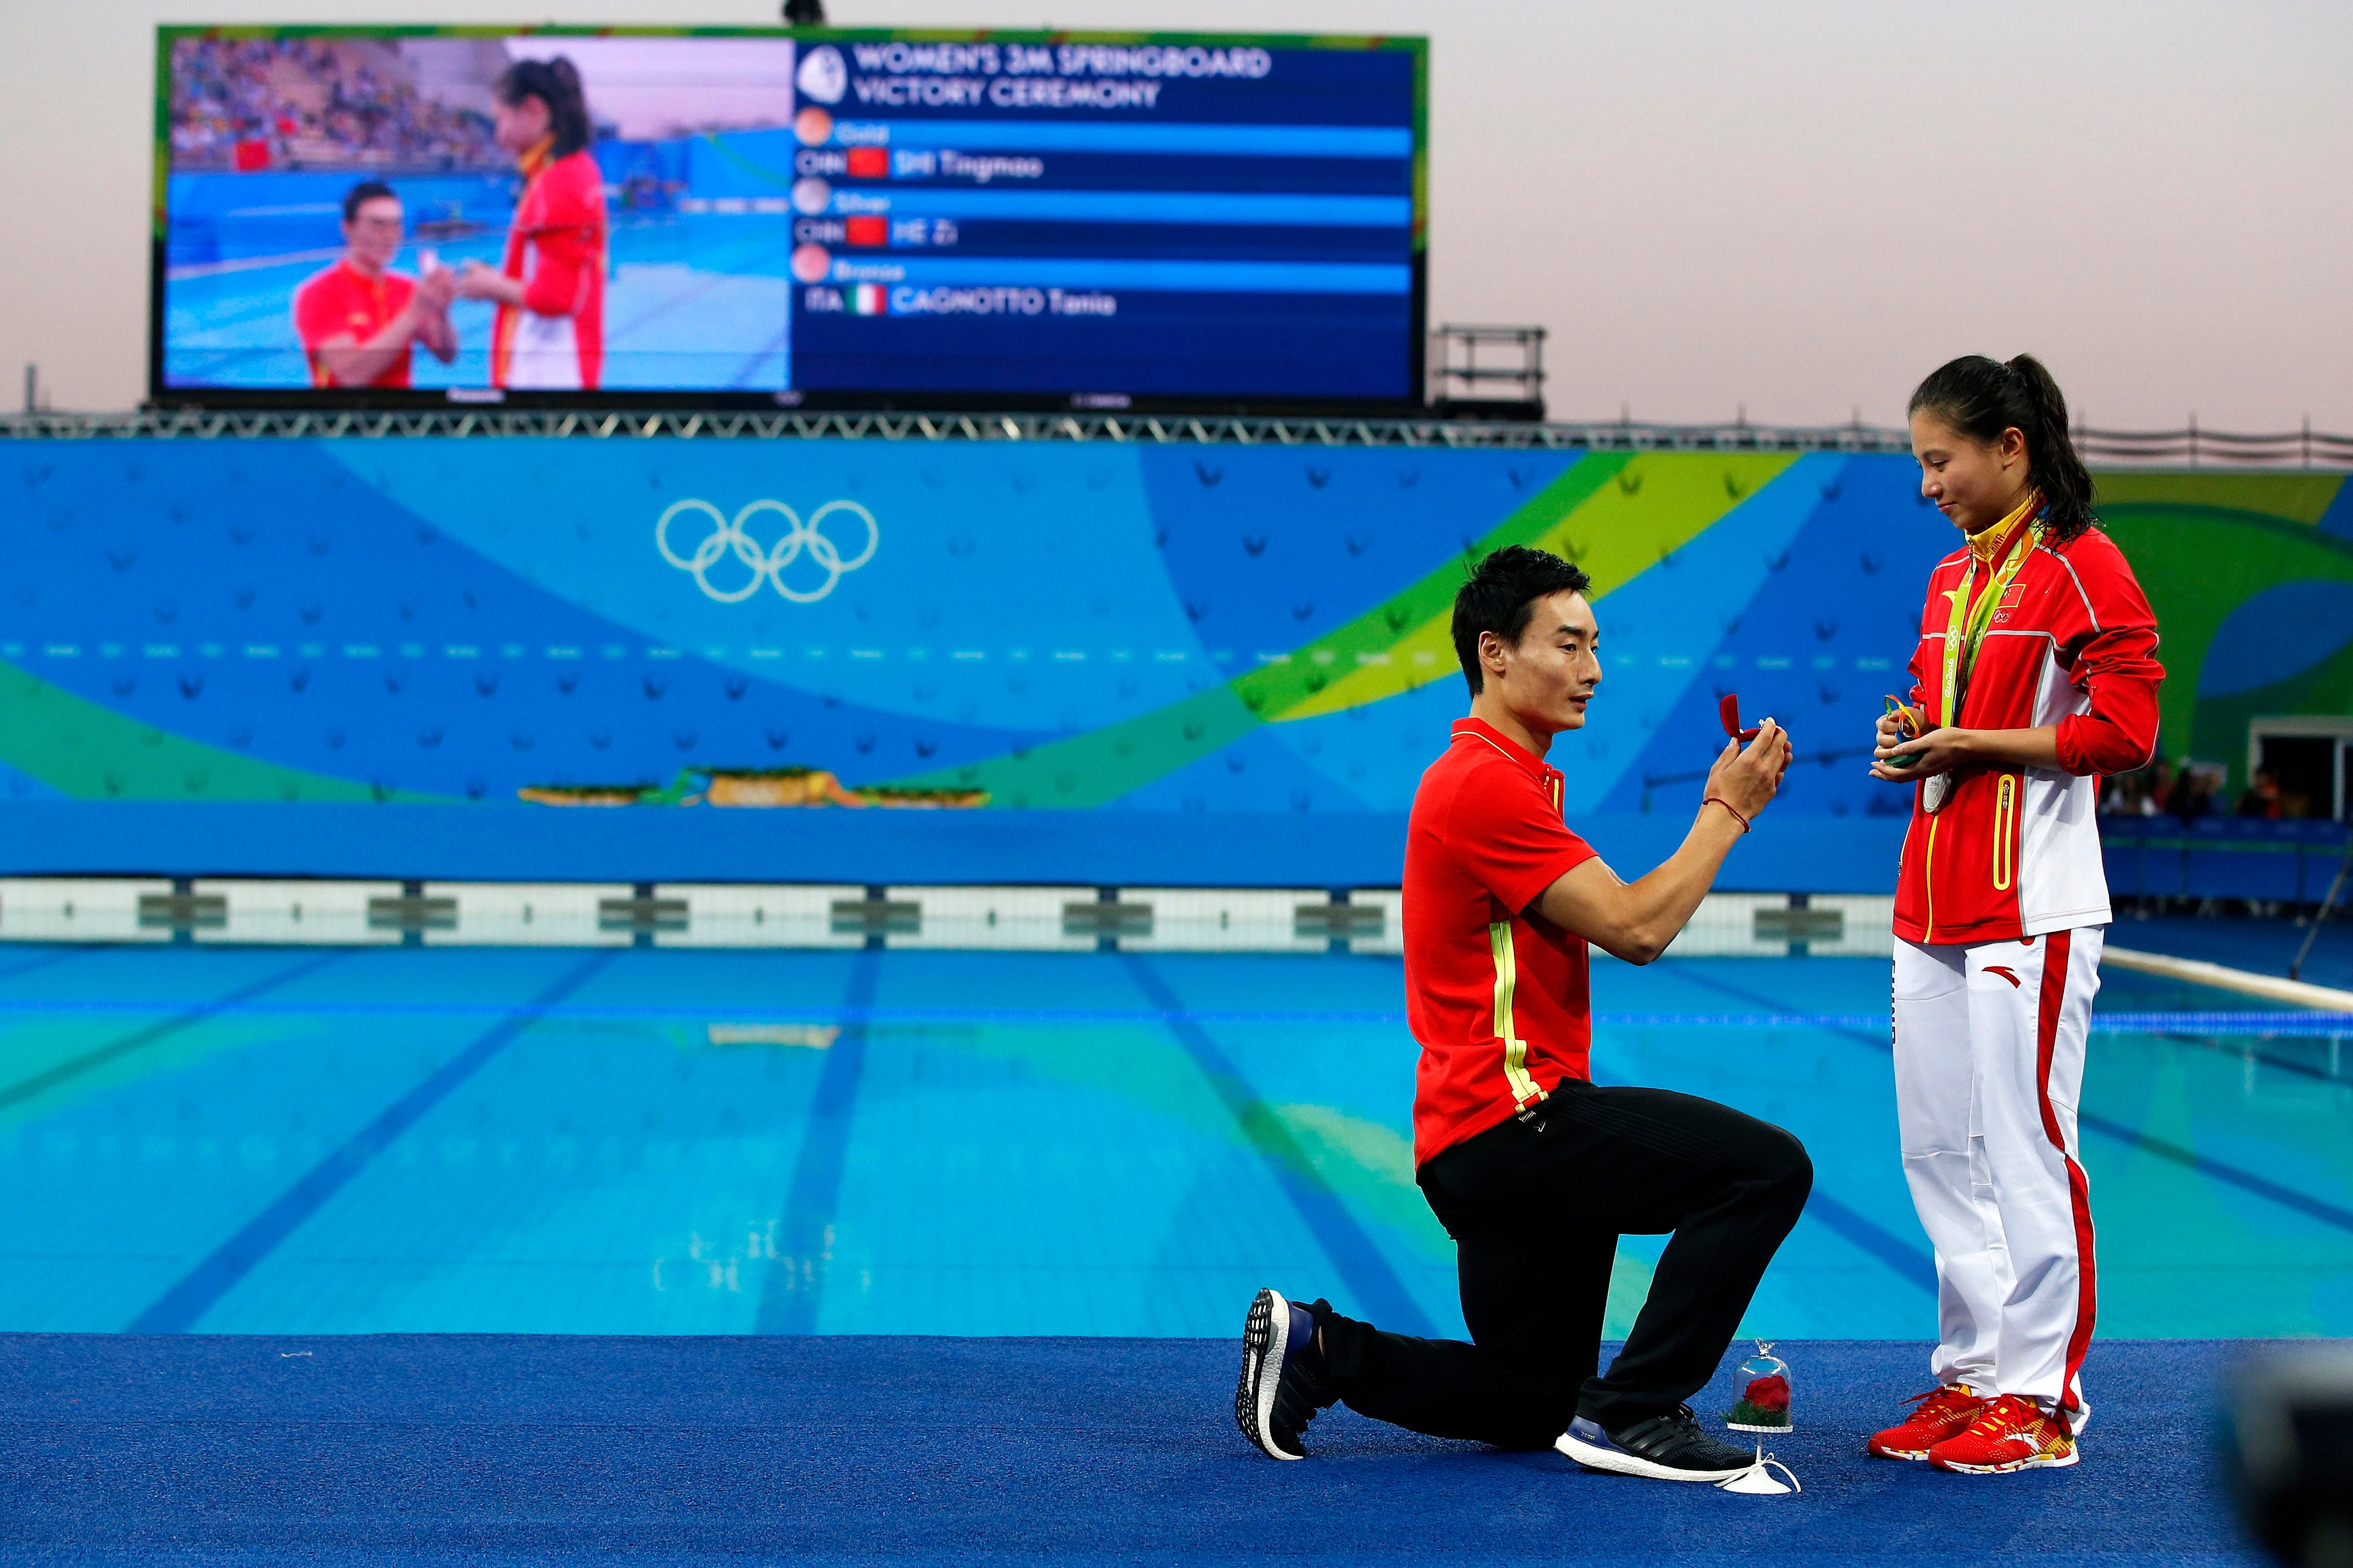 Atlet selam Tiongkok, He Zi (kanan), dilamar oleh kekasihnya, sesama atlet selam, Ki Qin, usai mendapat medali perak di nomor 3 meter di Olimpiade Rio, pada 14 Agustus 2016. Foto oleh Patrick Kraemer/EPA 